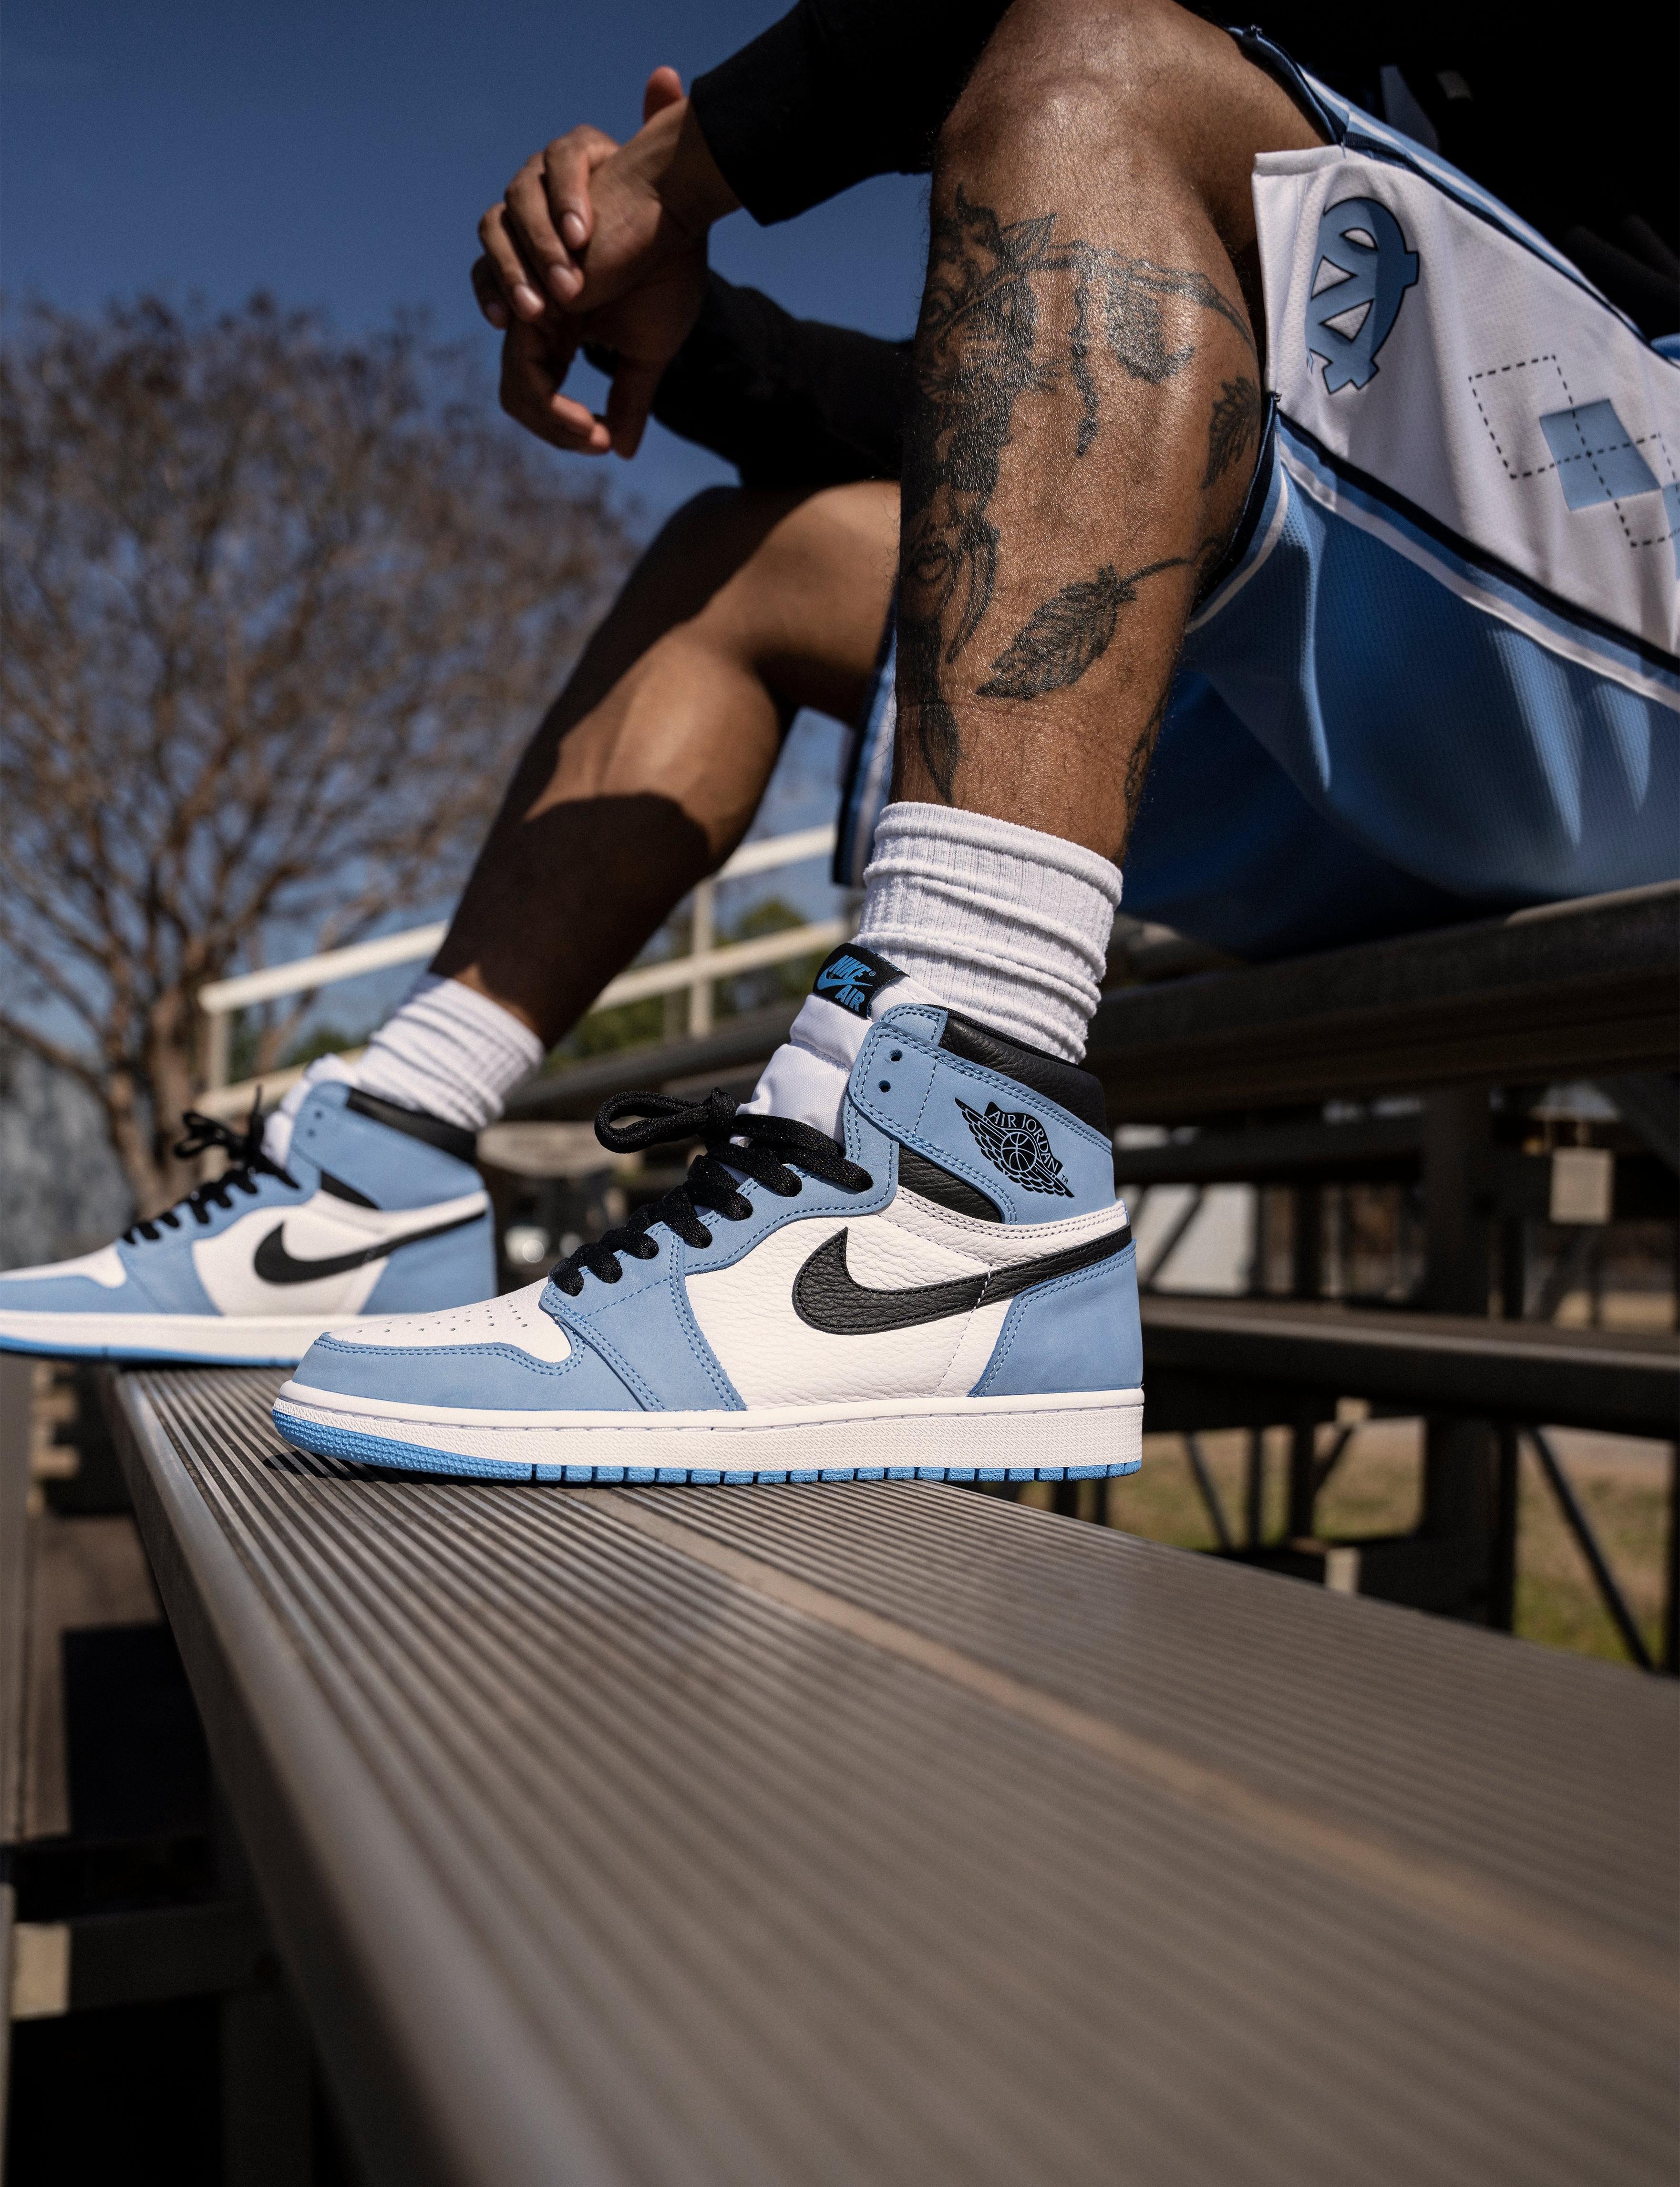 Sneakers Release – “University Blue” UNC-Inspired Jordan 1 Retro High ...